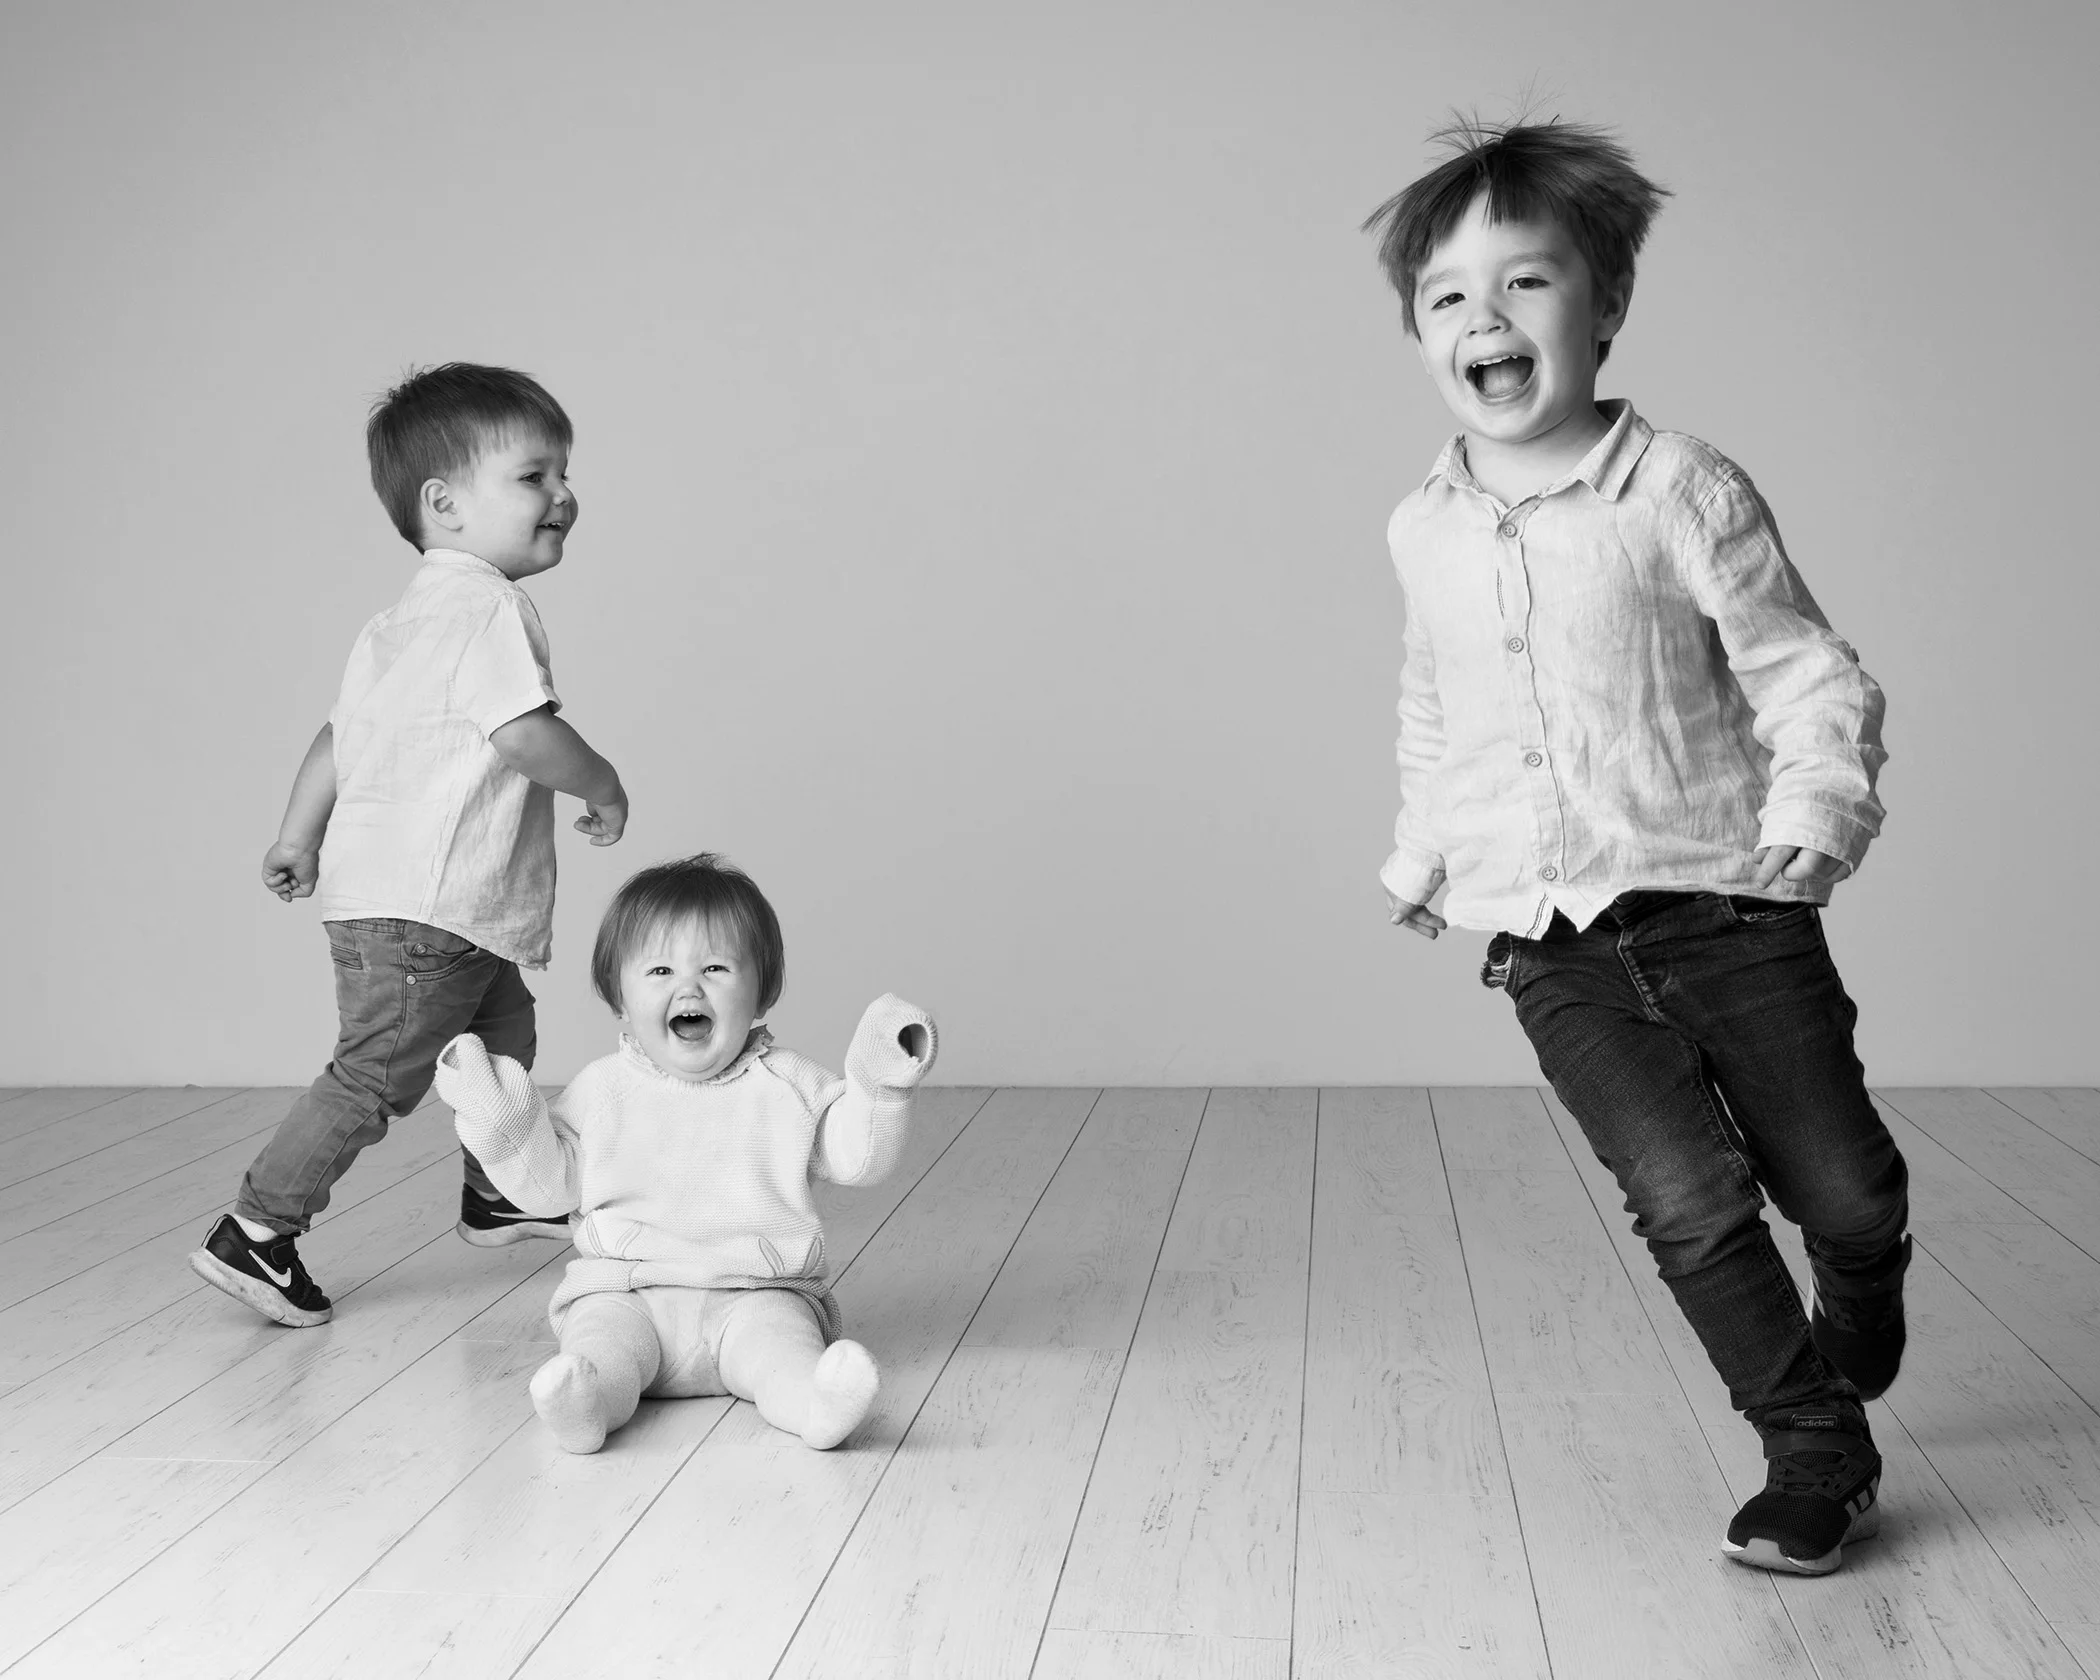 Black and white portrait of kids running